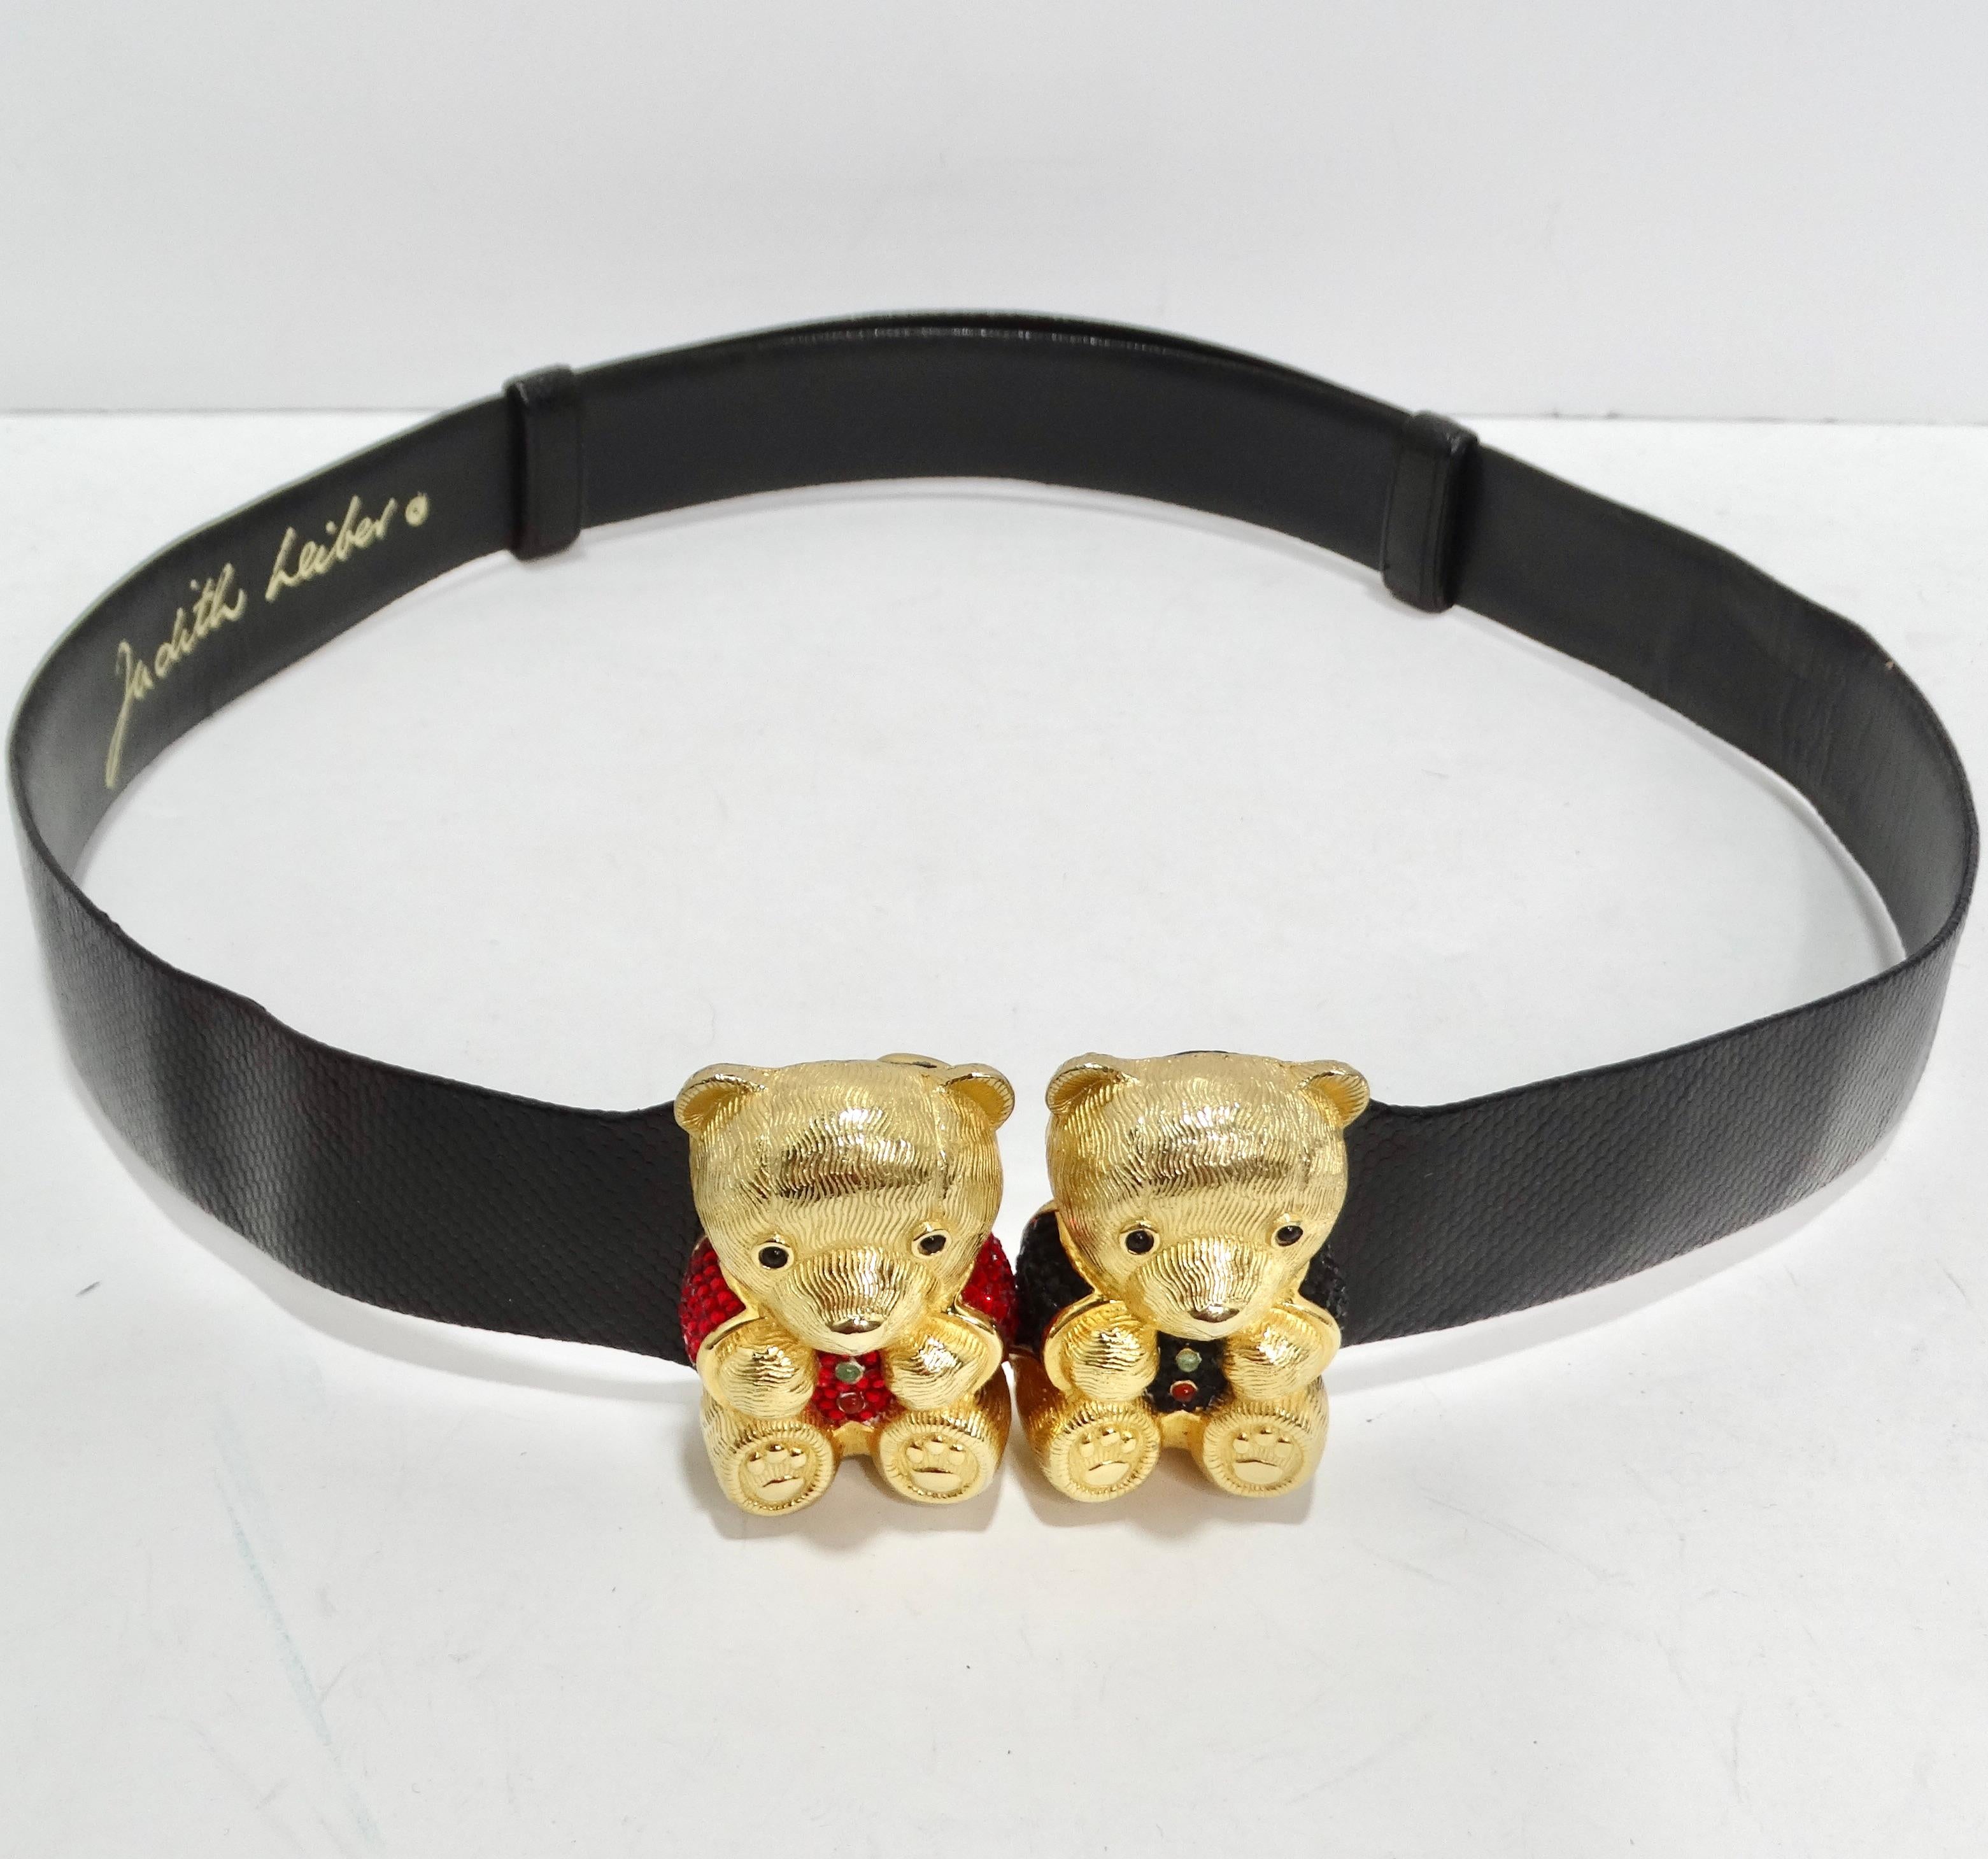 Judith Leiber 1980s Swarovski Teddy Bear Belt In Excellent Condition For Sale In Scottsdale, AZ